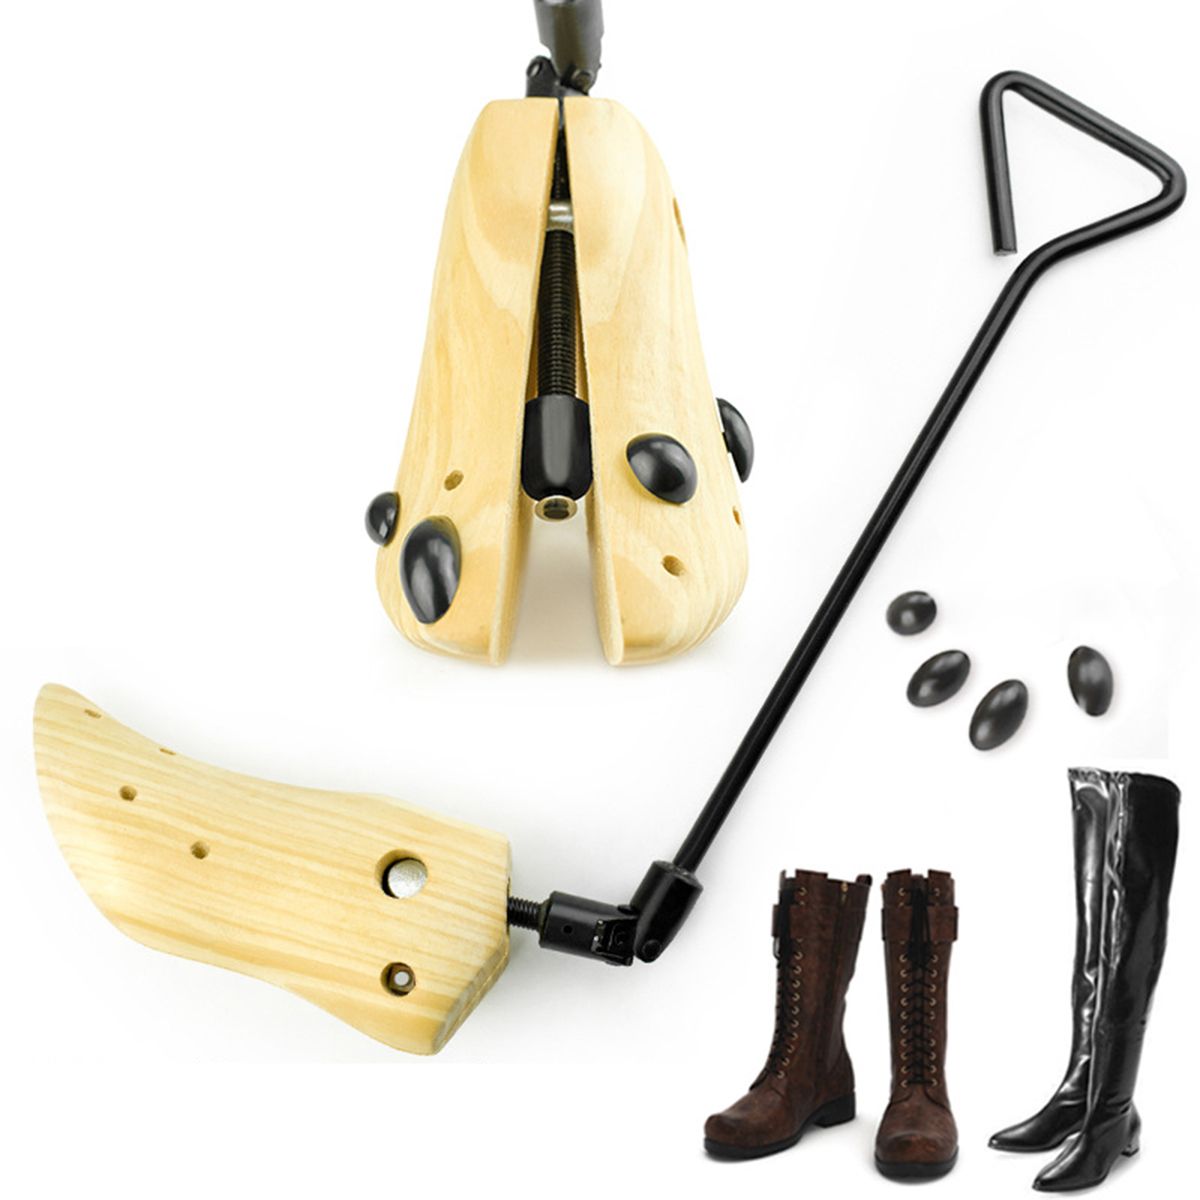 Adjustable-Boot-Stretcher-Width-Shoe-Shaper-Pine-Wooden-Boot-Tree-Stretch-for-Men-Women-EU35-46-1575304